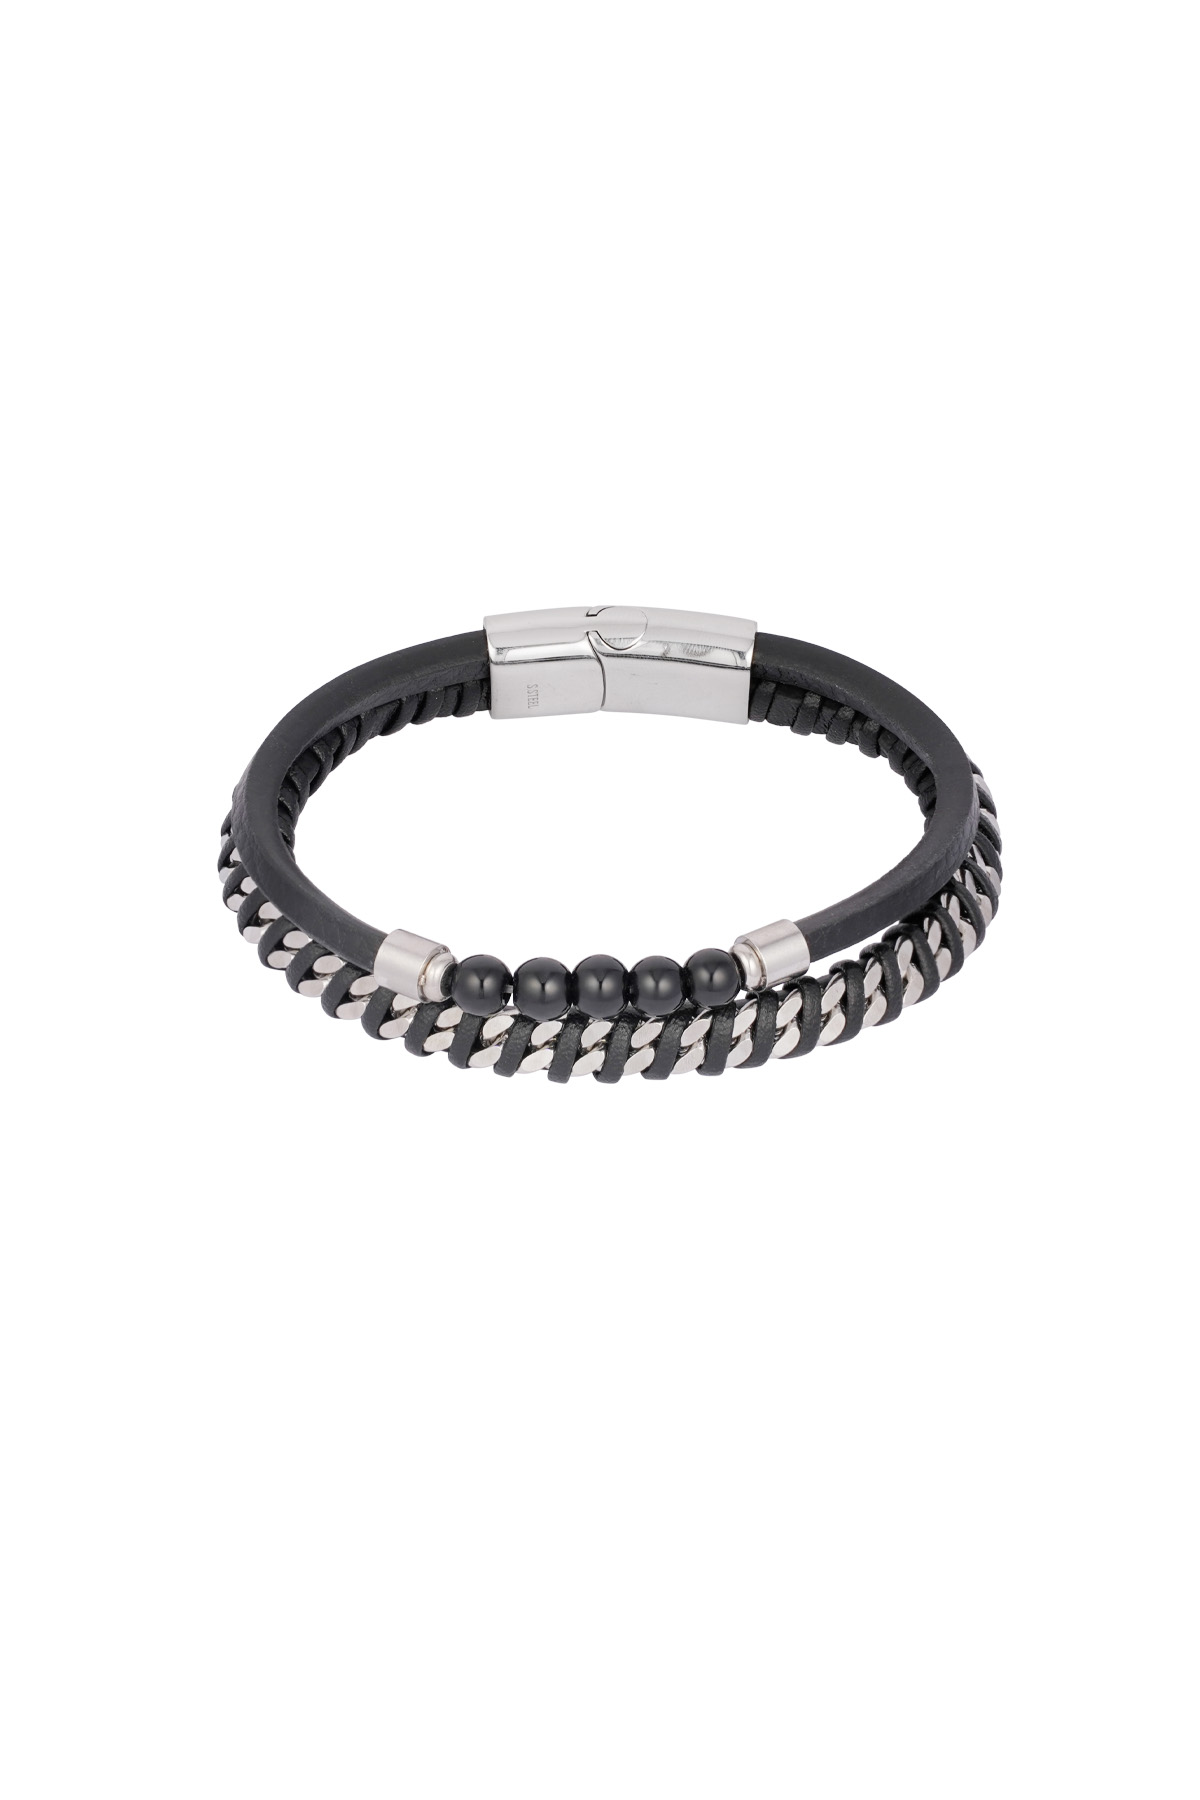 Bracelet homme phénix - argent noir h5 